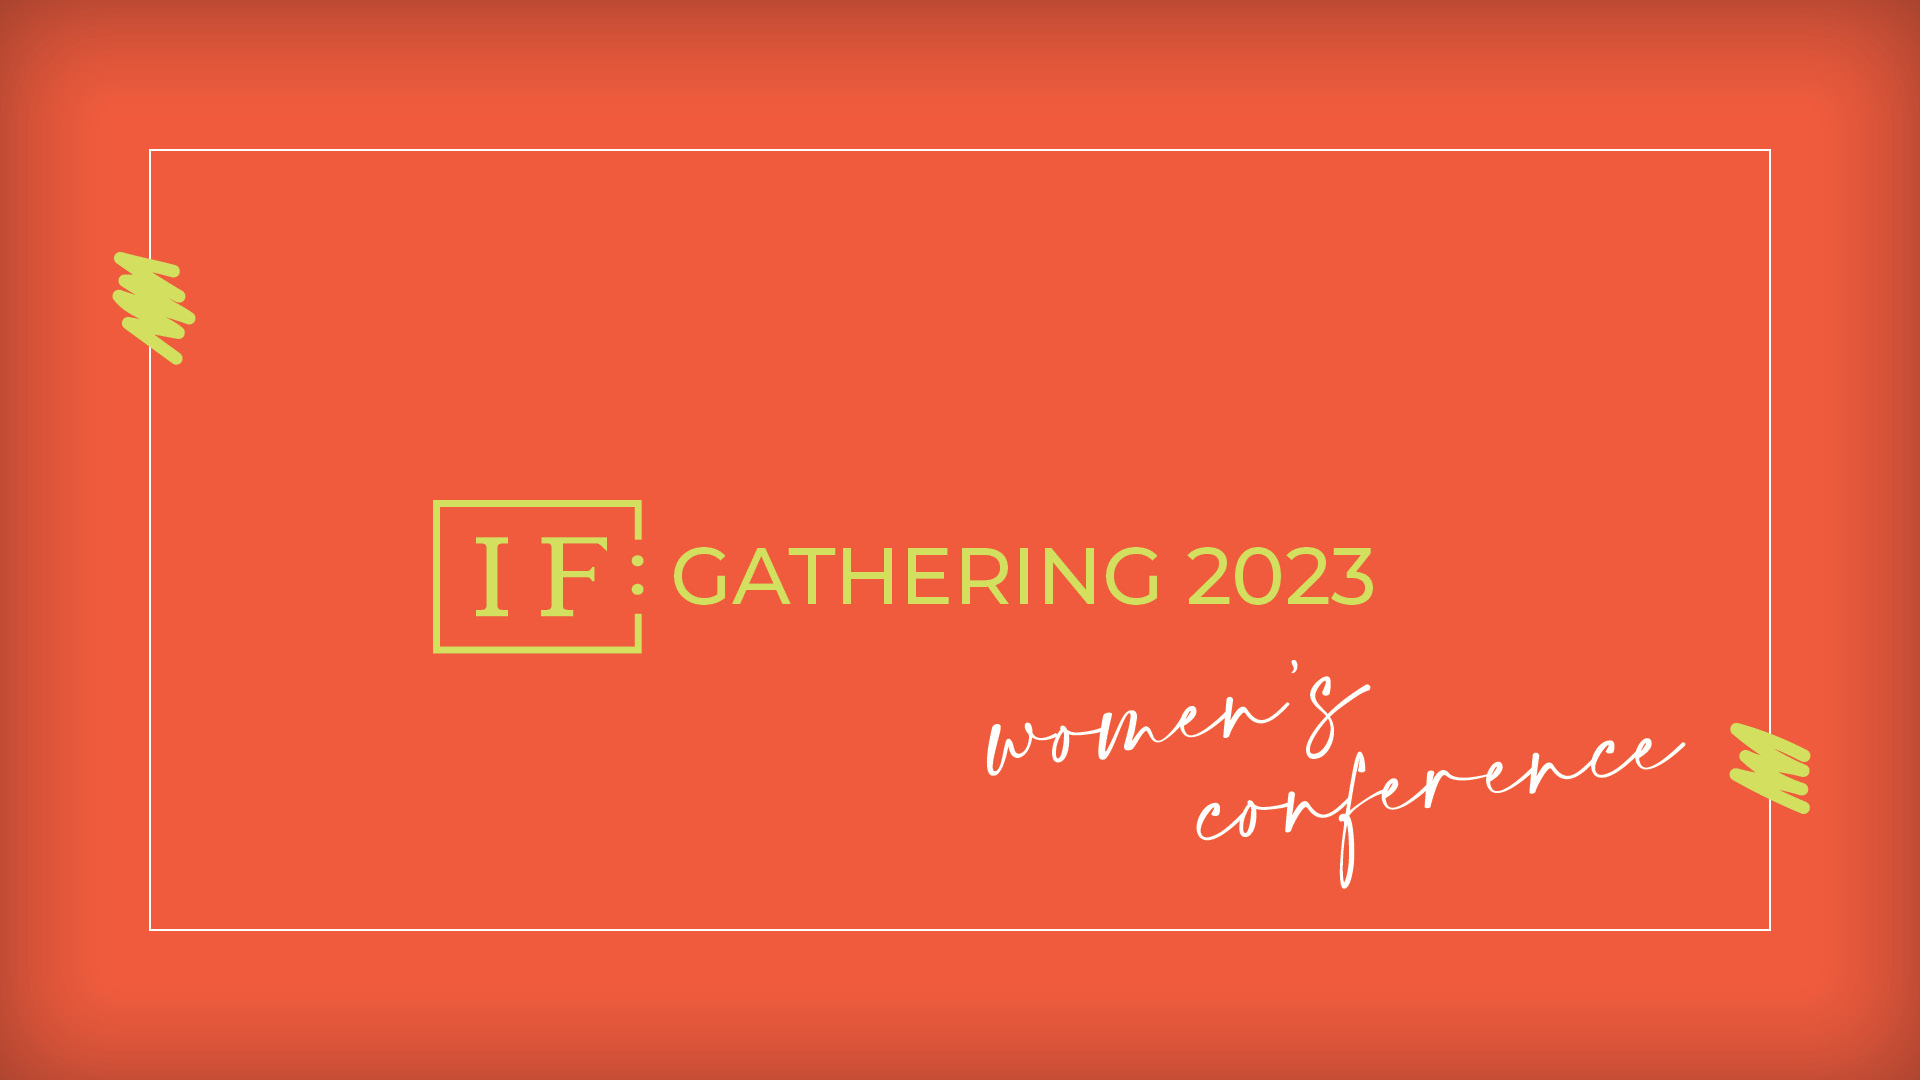 IF:Gathering 2023
April 28–29 | Oak Brook
